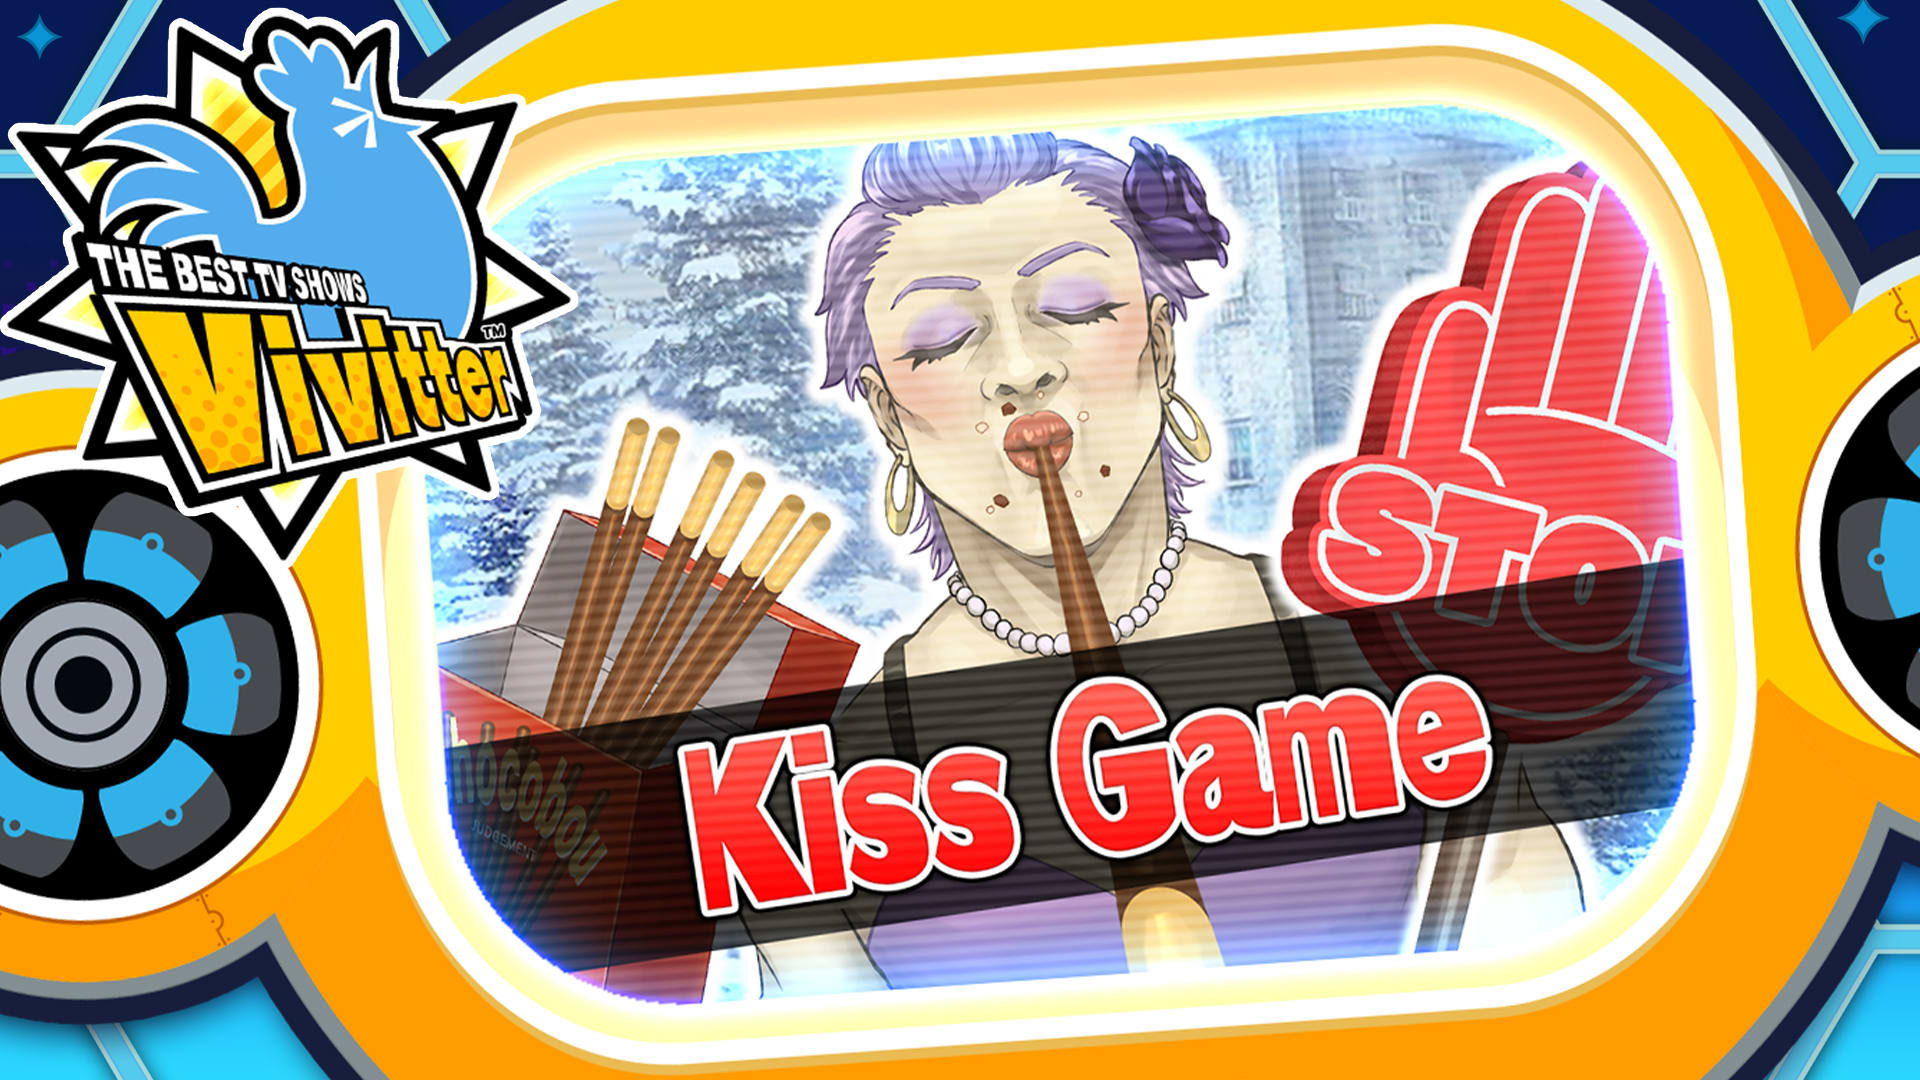 Additional mini-game "Kiss Game"